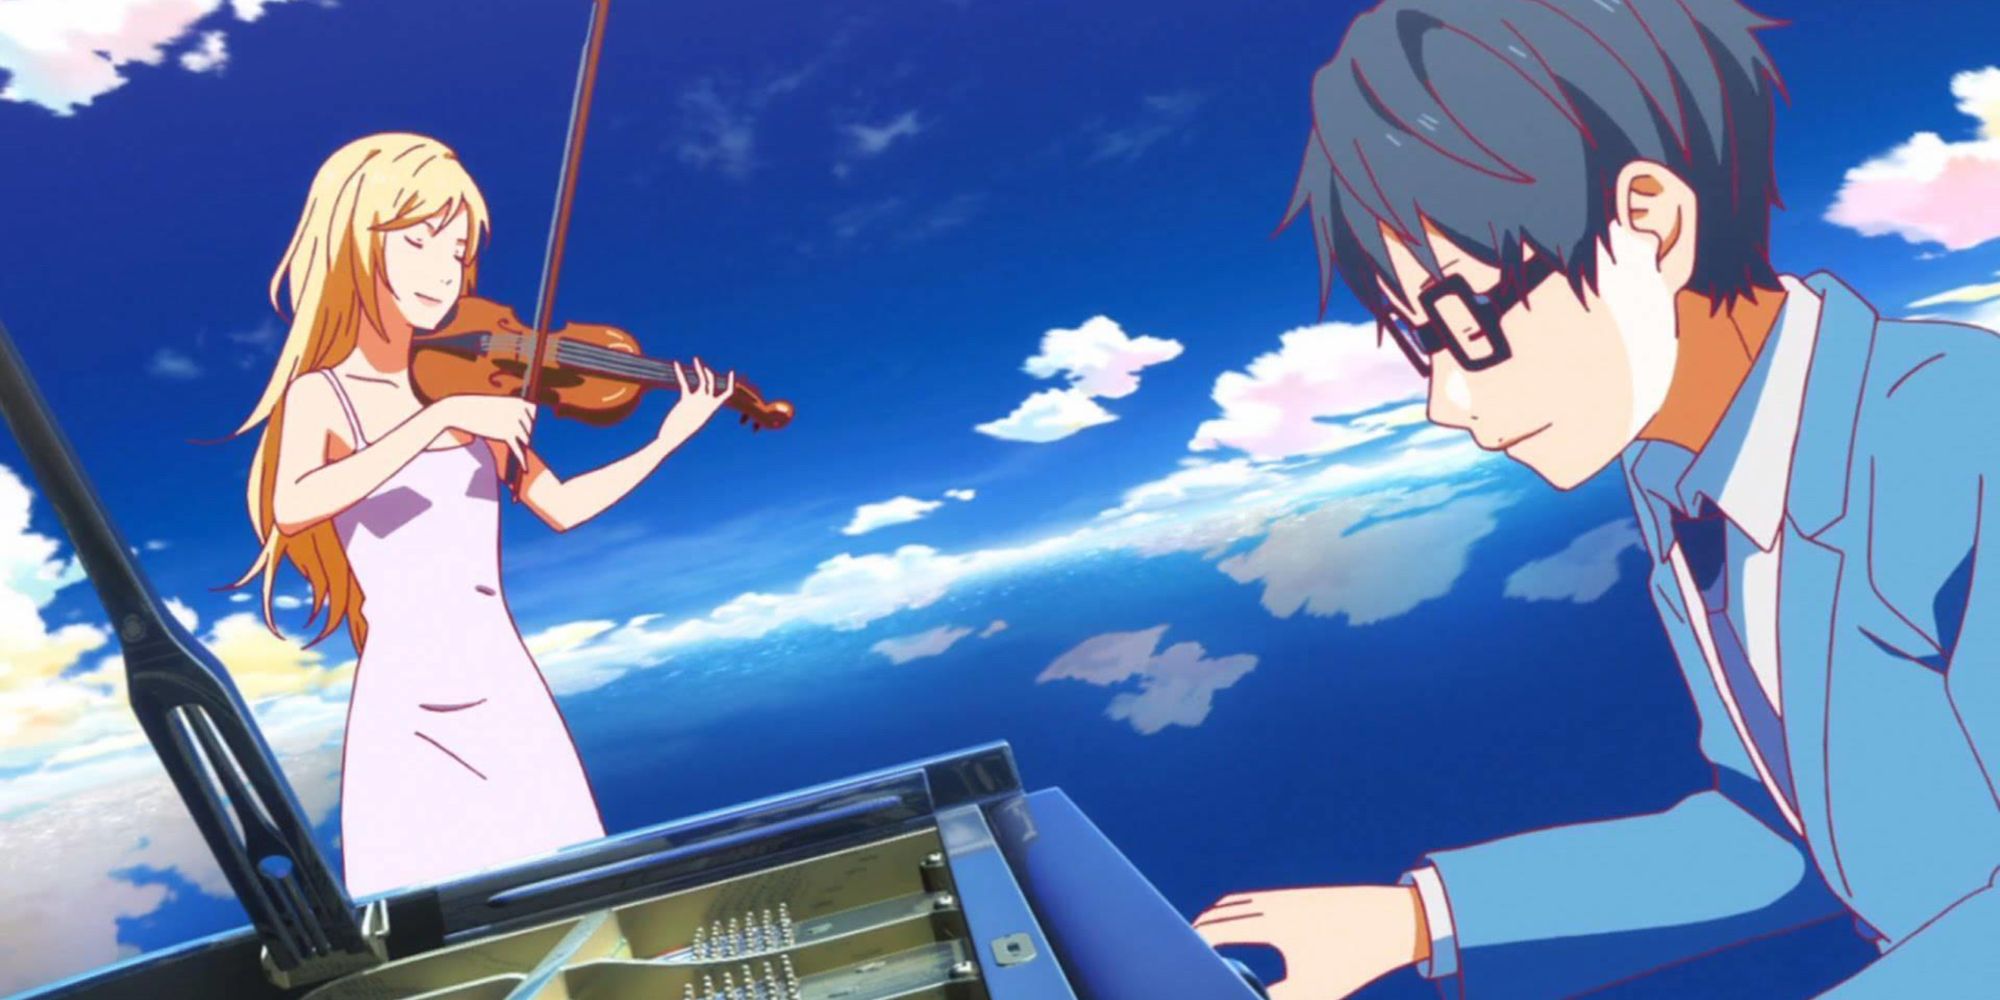 Kosei and Kaori playing music together